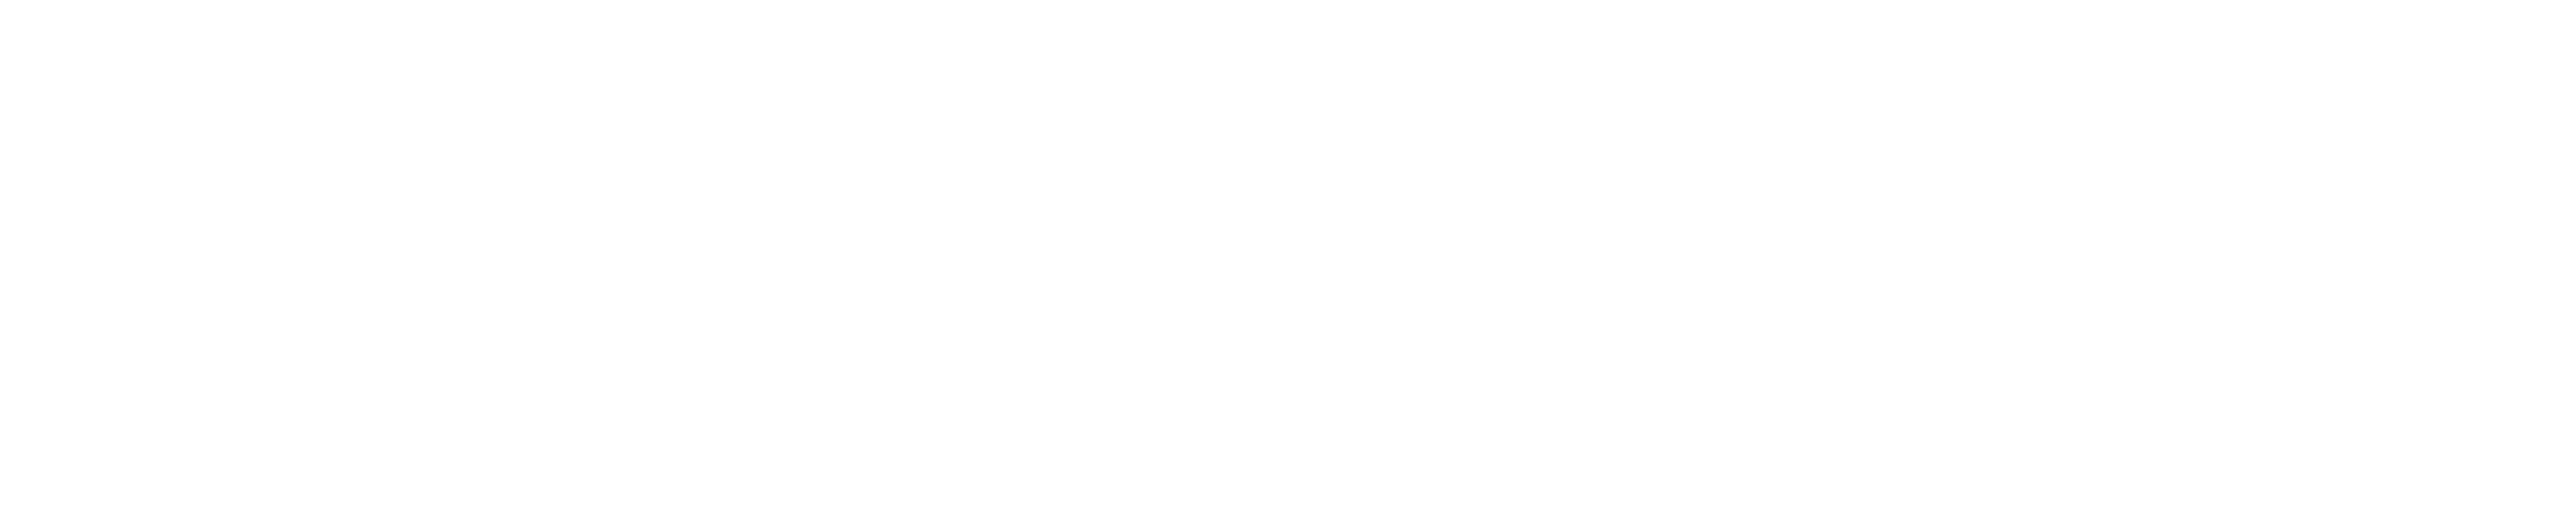 Sea-Land Chemical Company logo